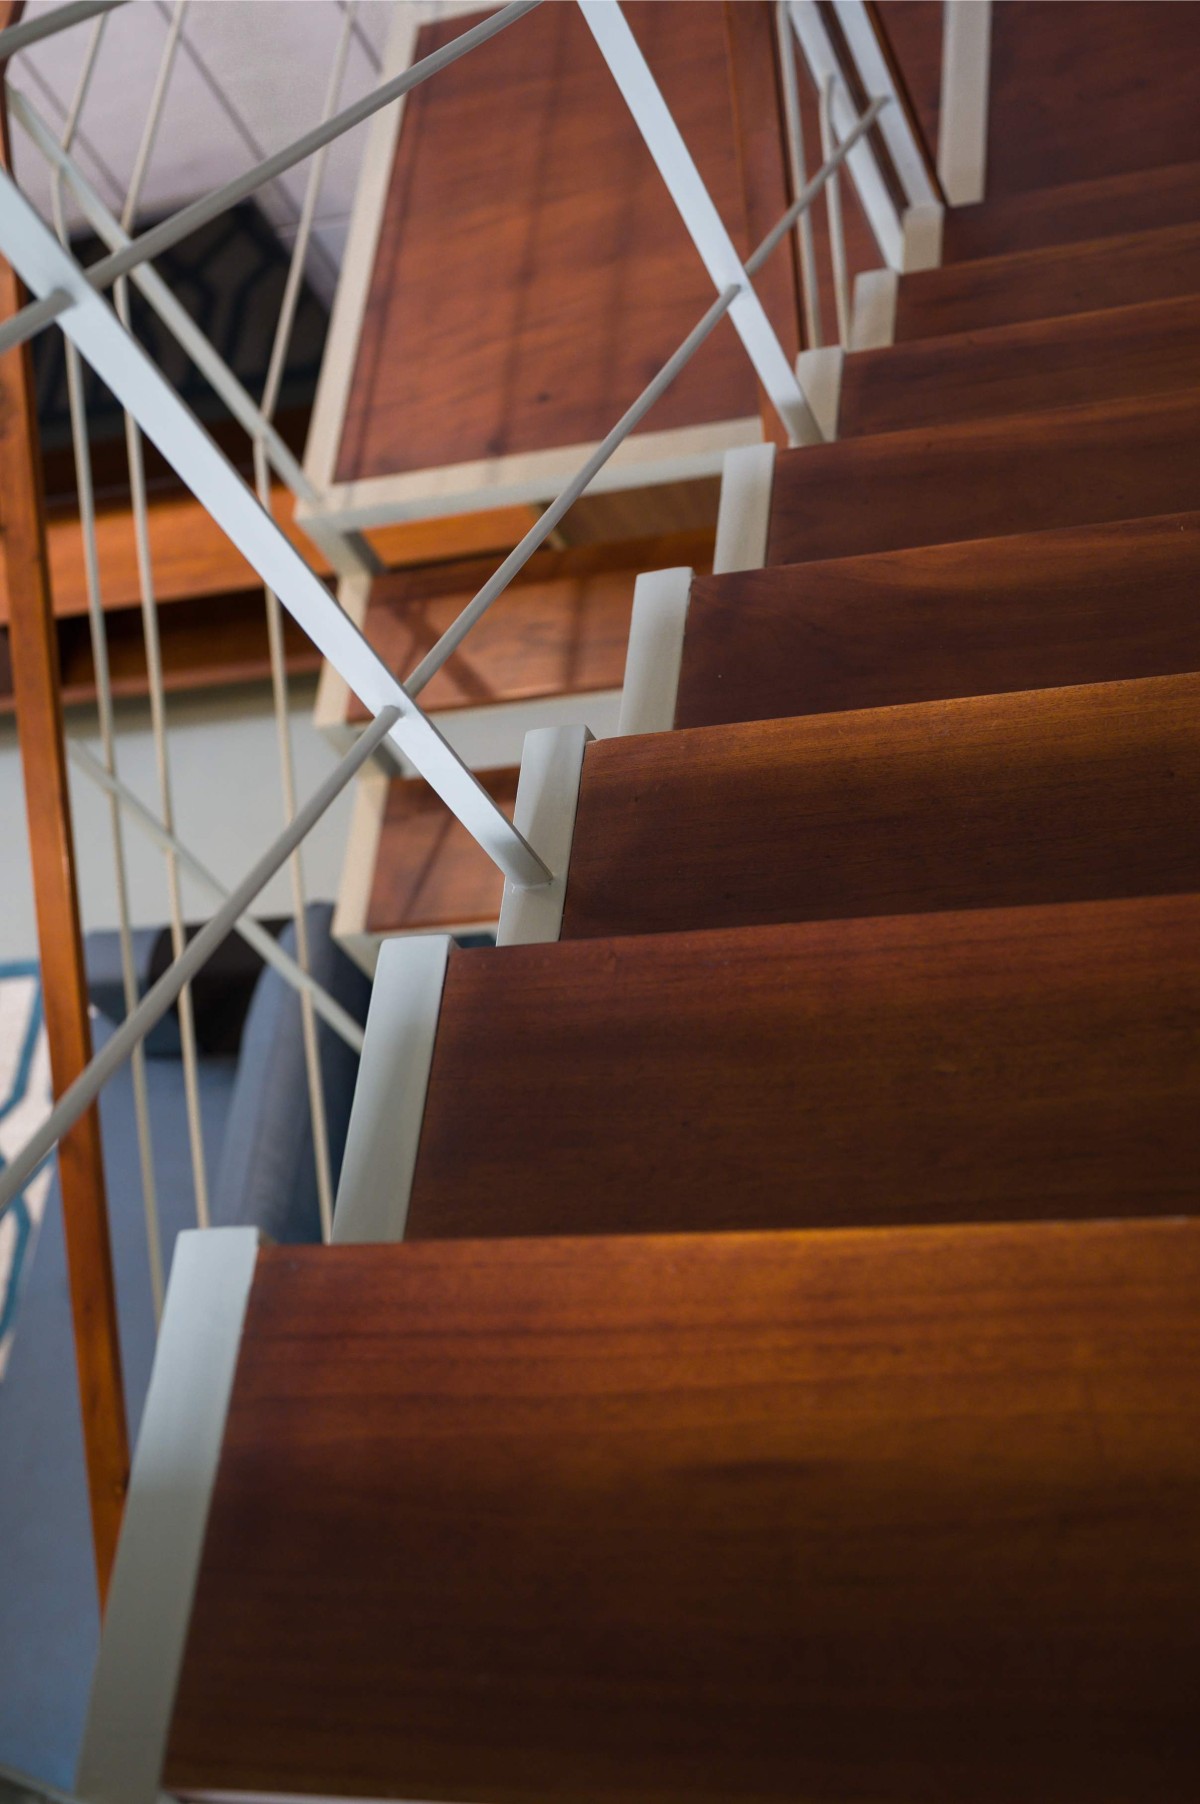 Staircase of Loggia by Innarch Design Studio